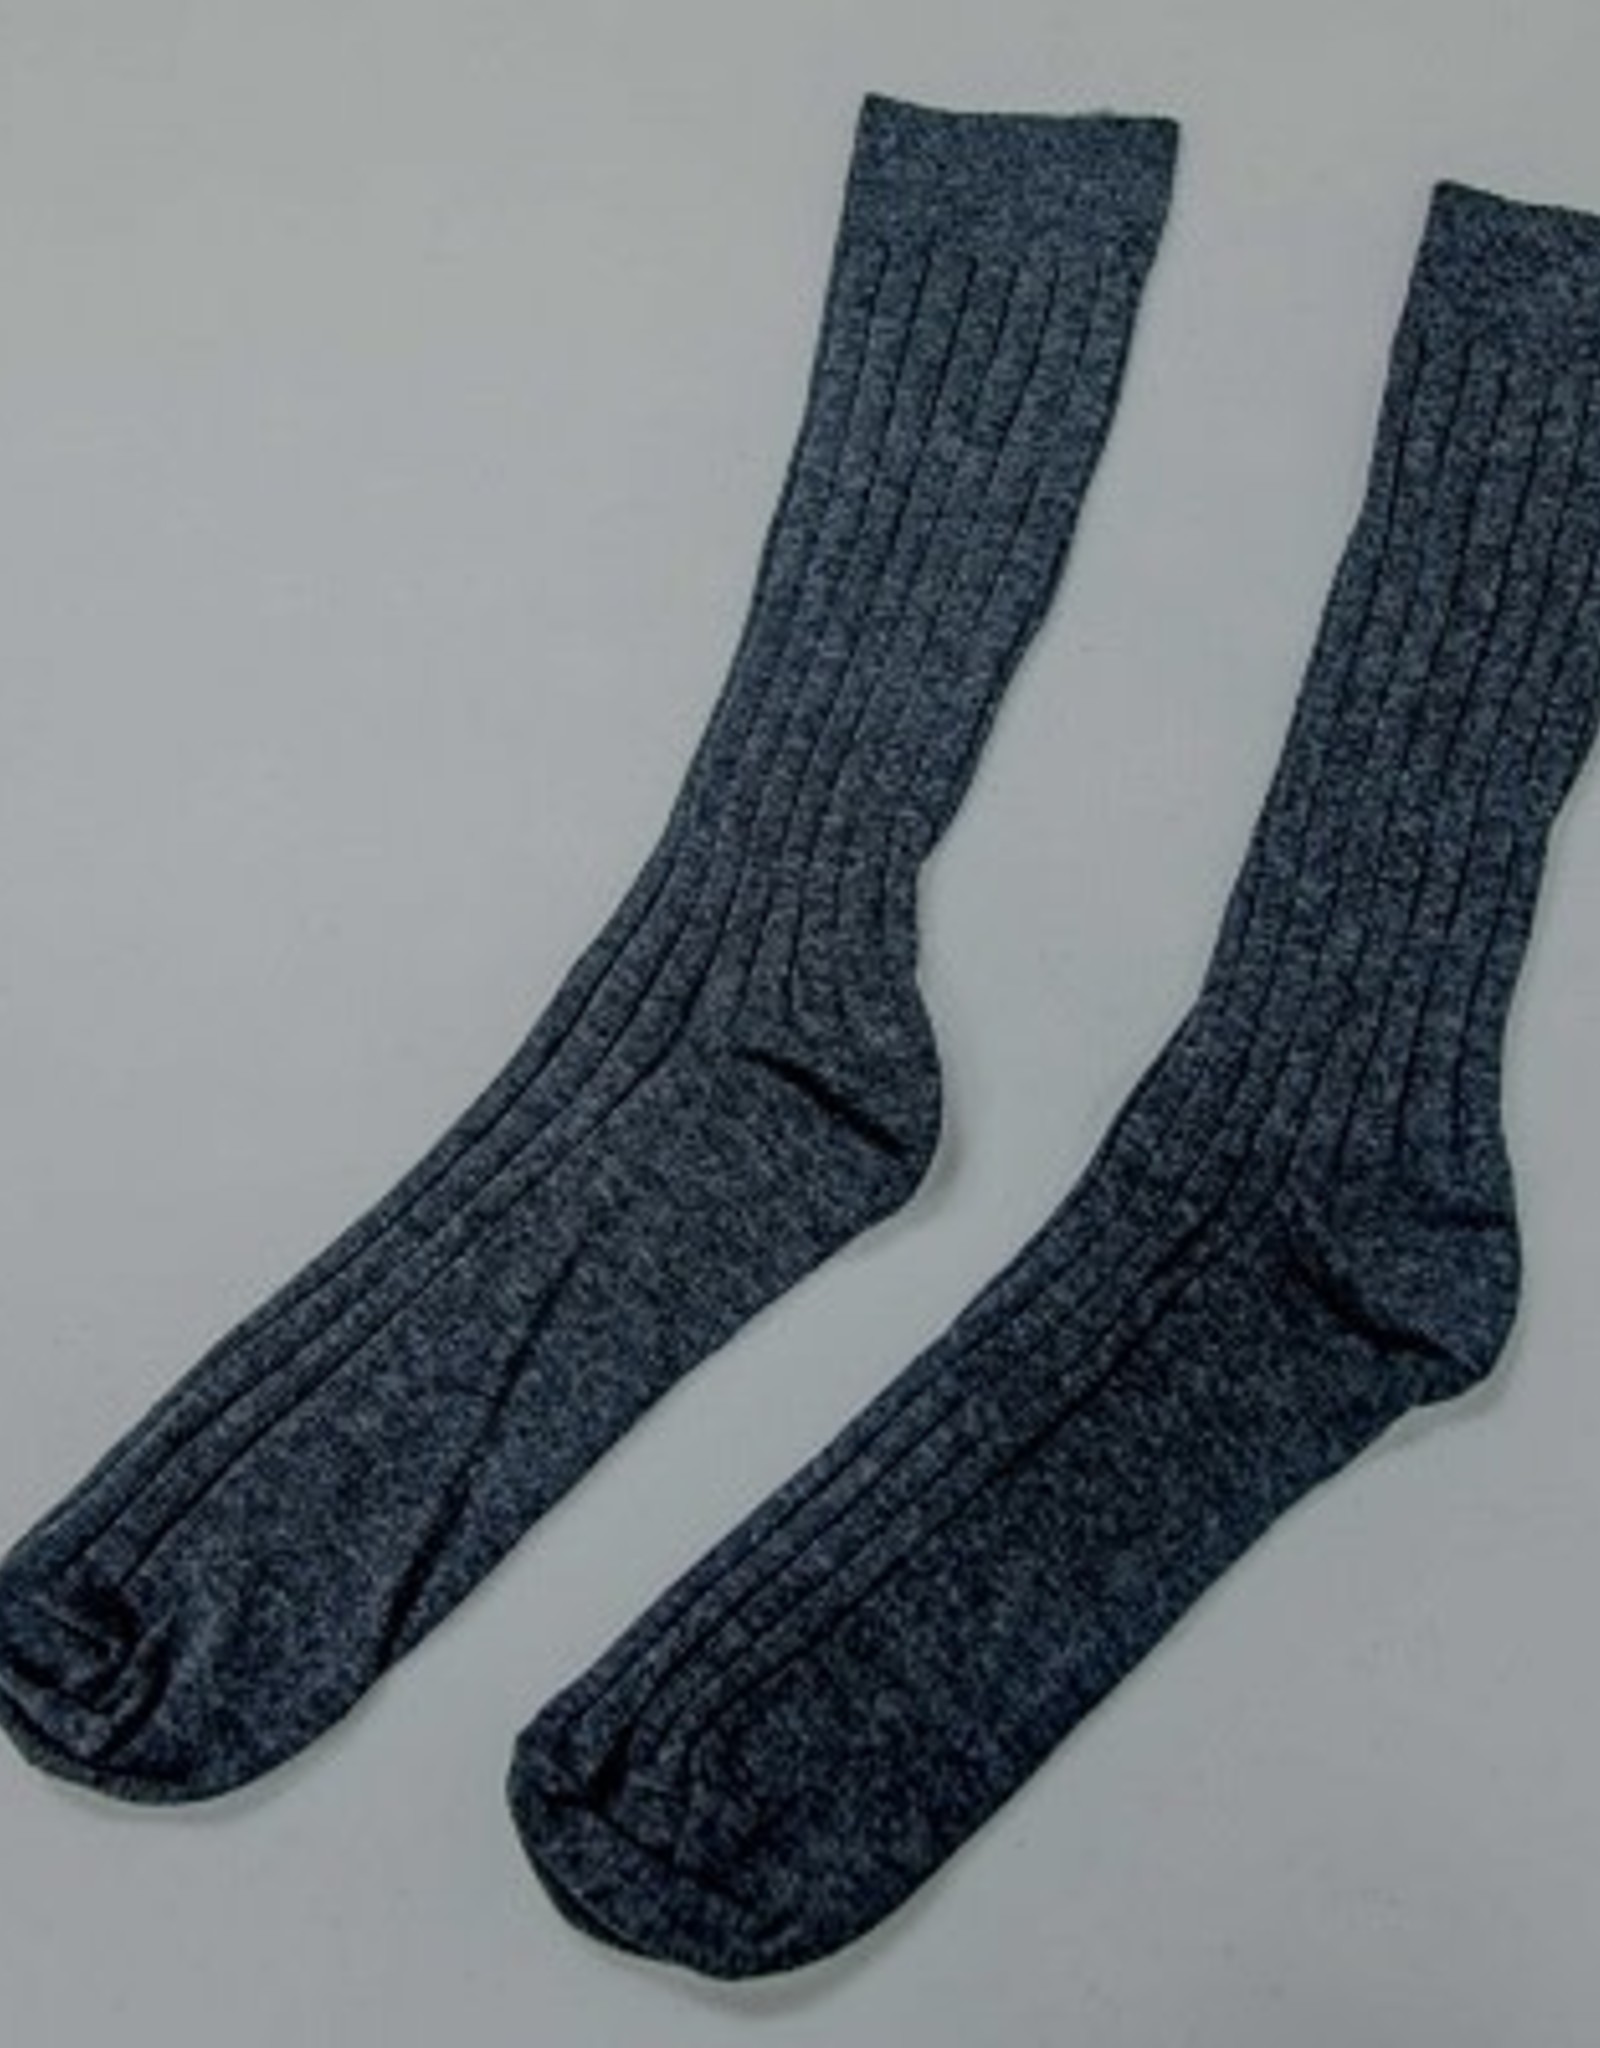 Sock Pant Grey A 6-12 - The PA Shop@Bayview Glen